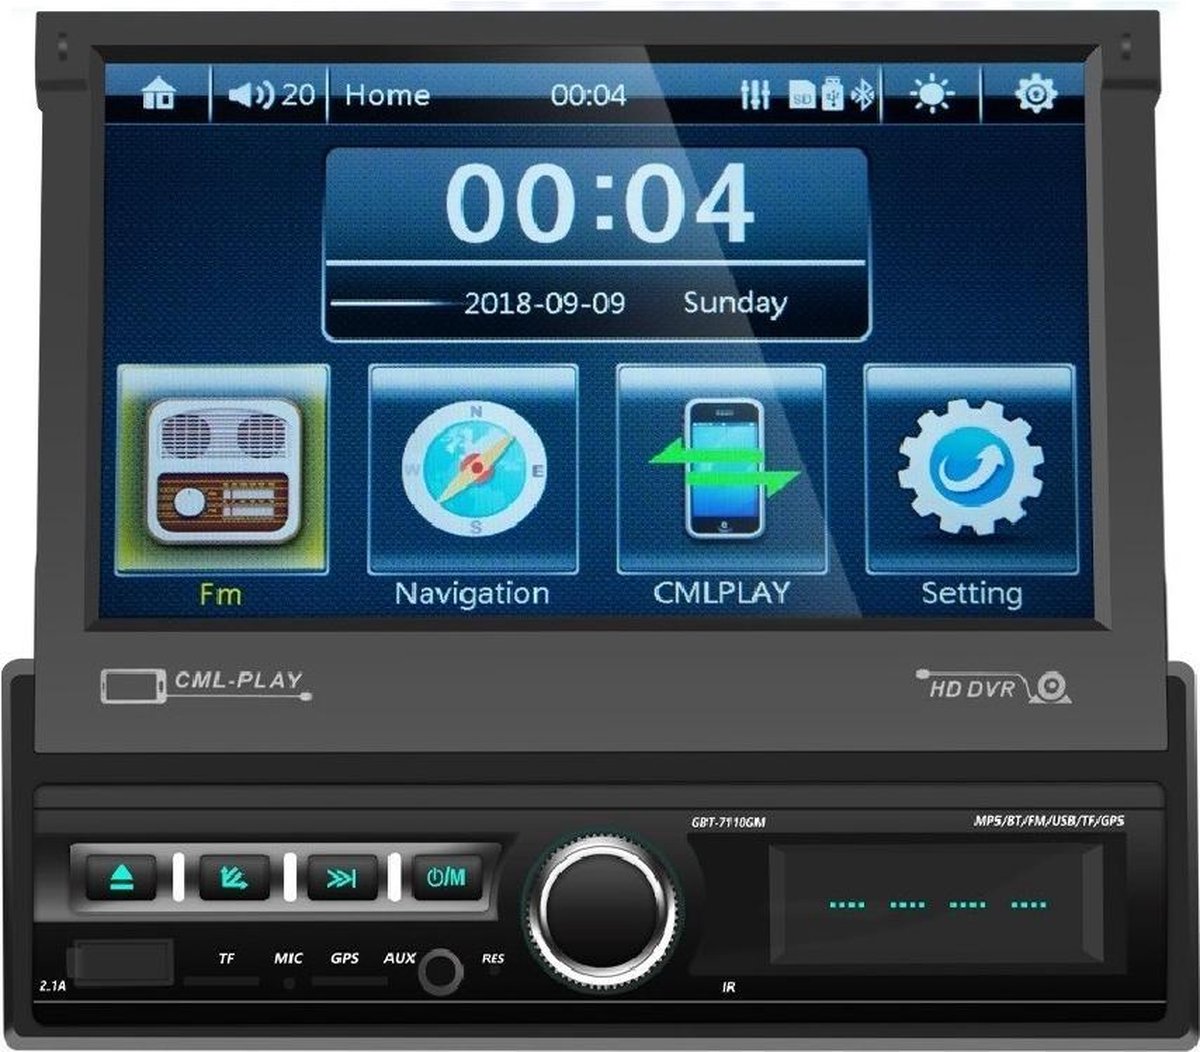 TechU™ Autoradio met klapscherm T143 – 1 Din met Afstandsbediening – 7.0 inch Touchscreen Monitor – FM radio – Bluetooth – USB – AUX – SD – GPS Navigatie – Handsfree bellen